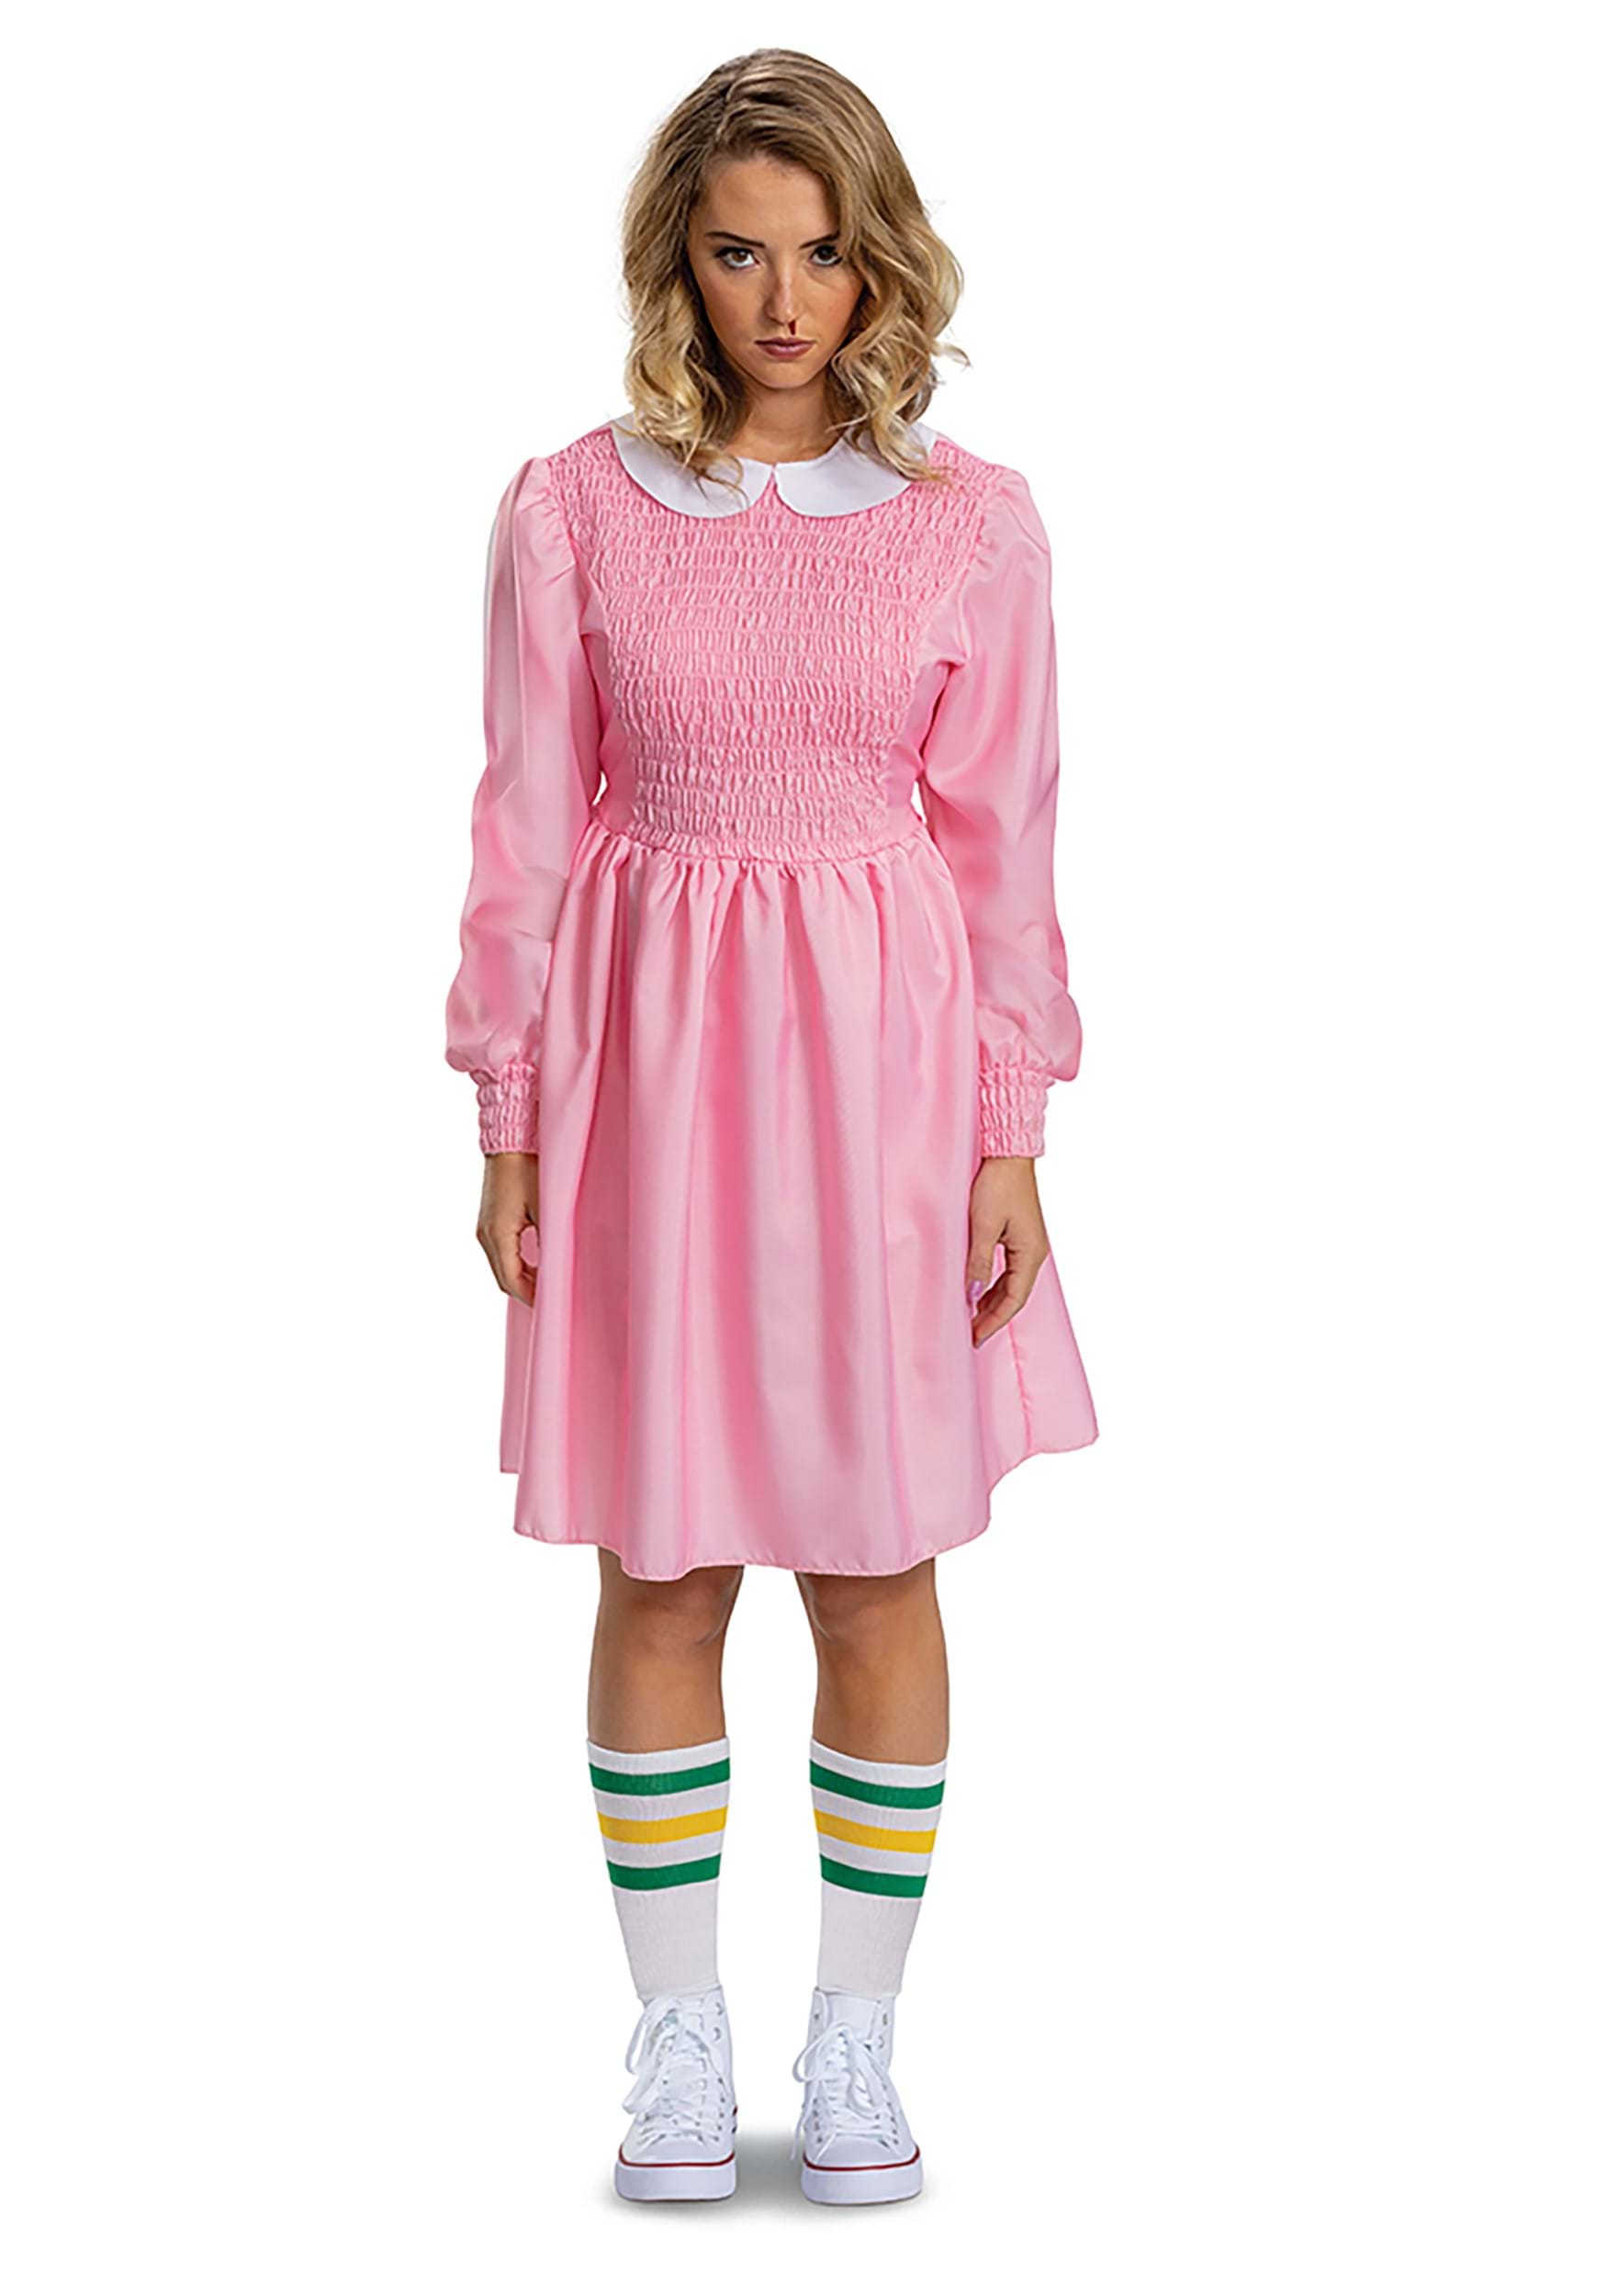 Eleven From Stranger Things Pink Dress Girls Dress Costume 